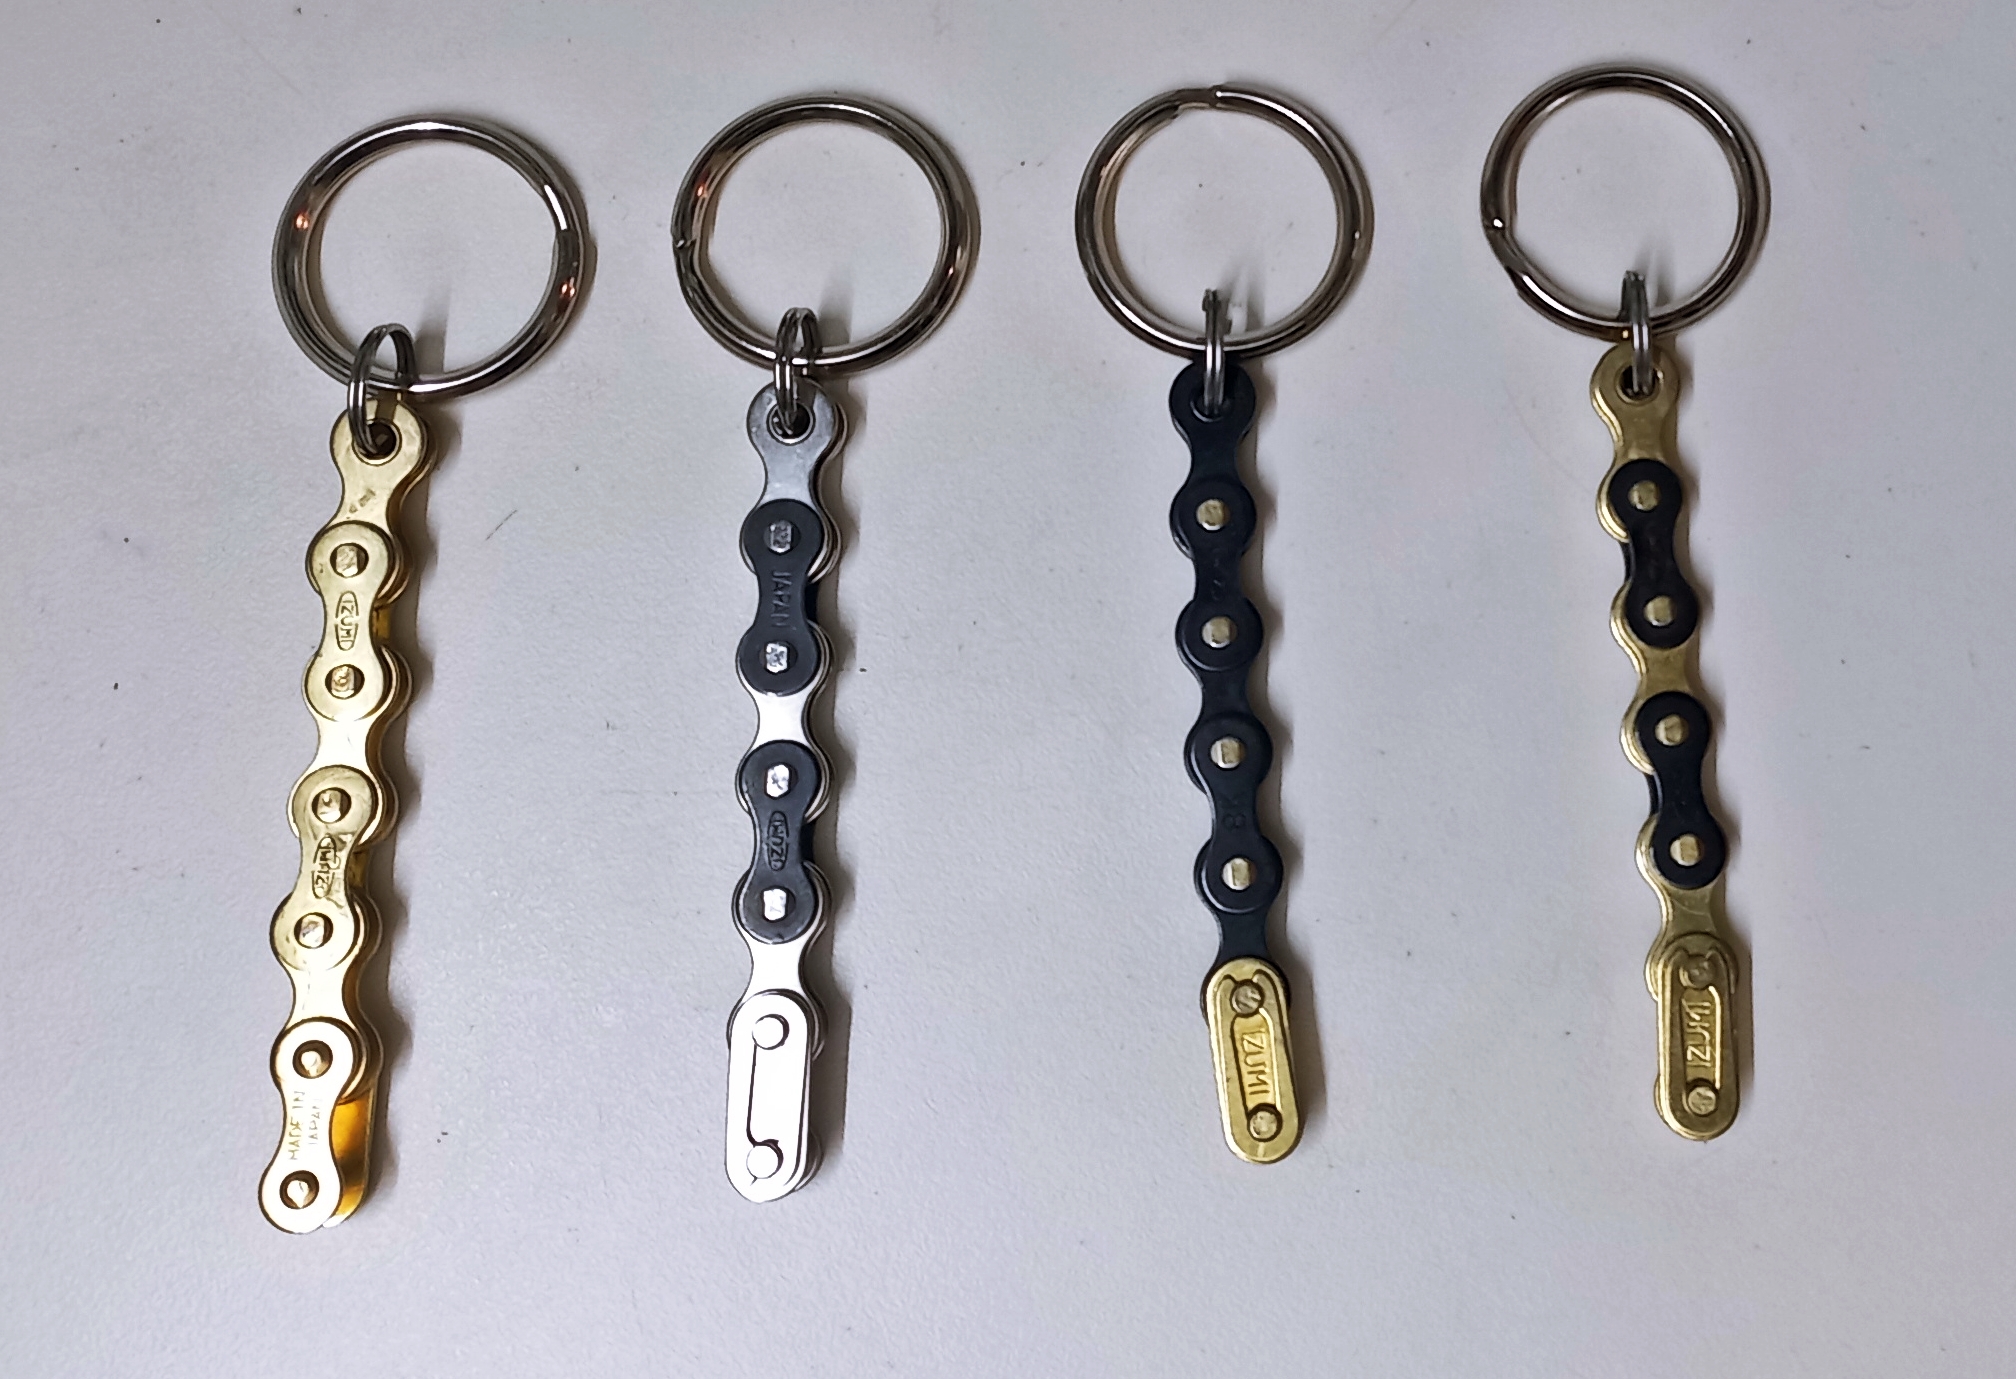 IZUMI  key holder's  (KEY CHAIN)